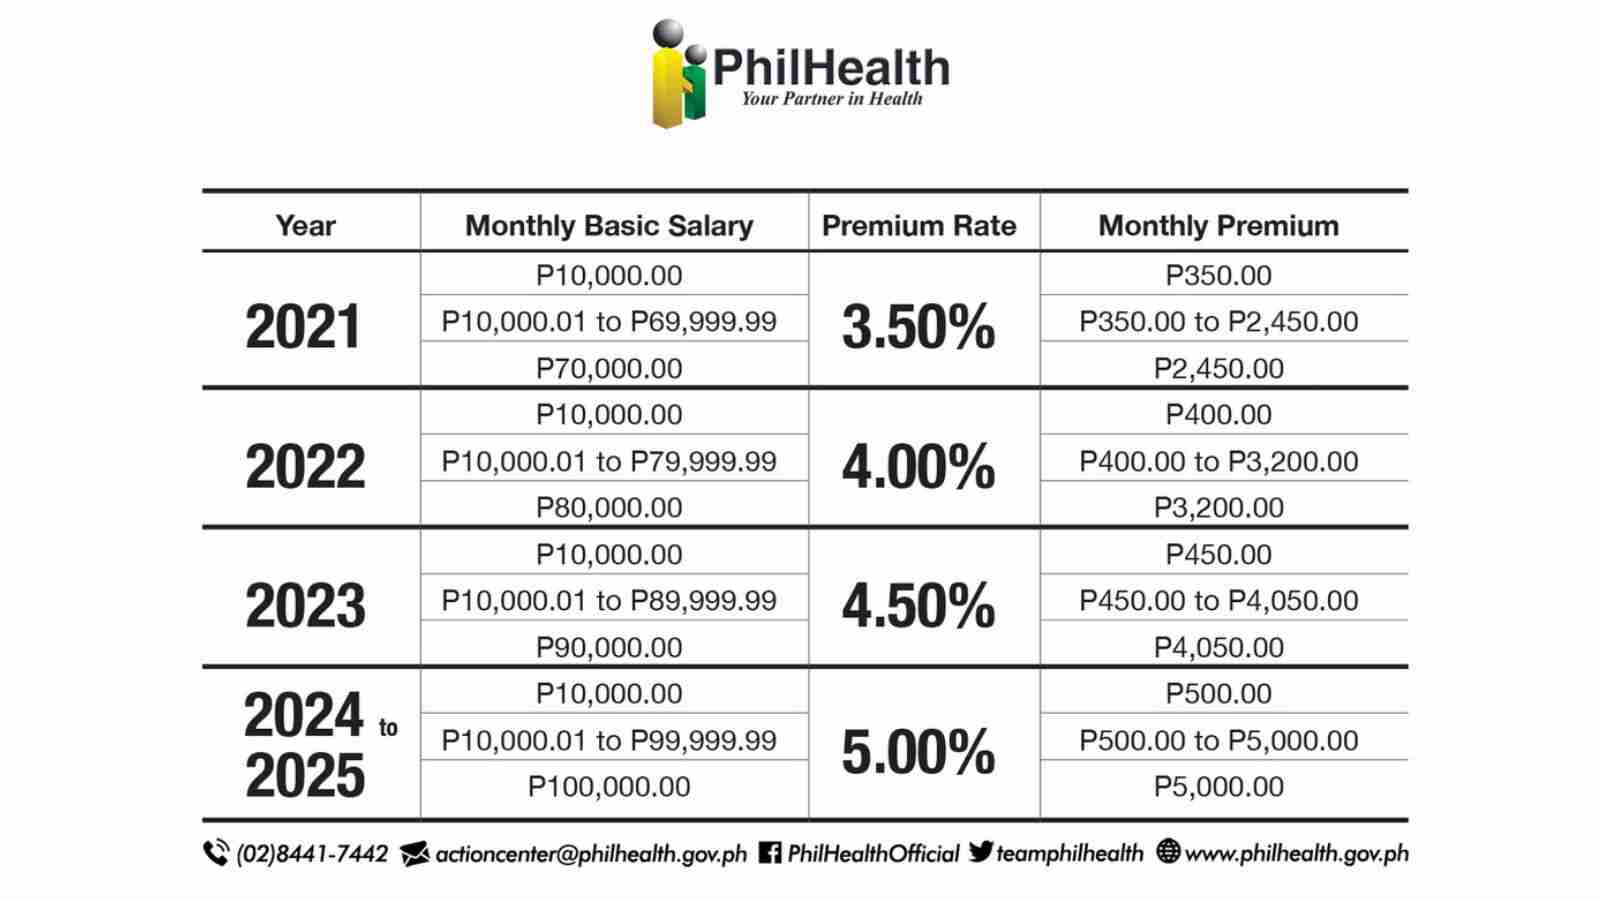 philhealth monthly premiums 2024 2025